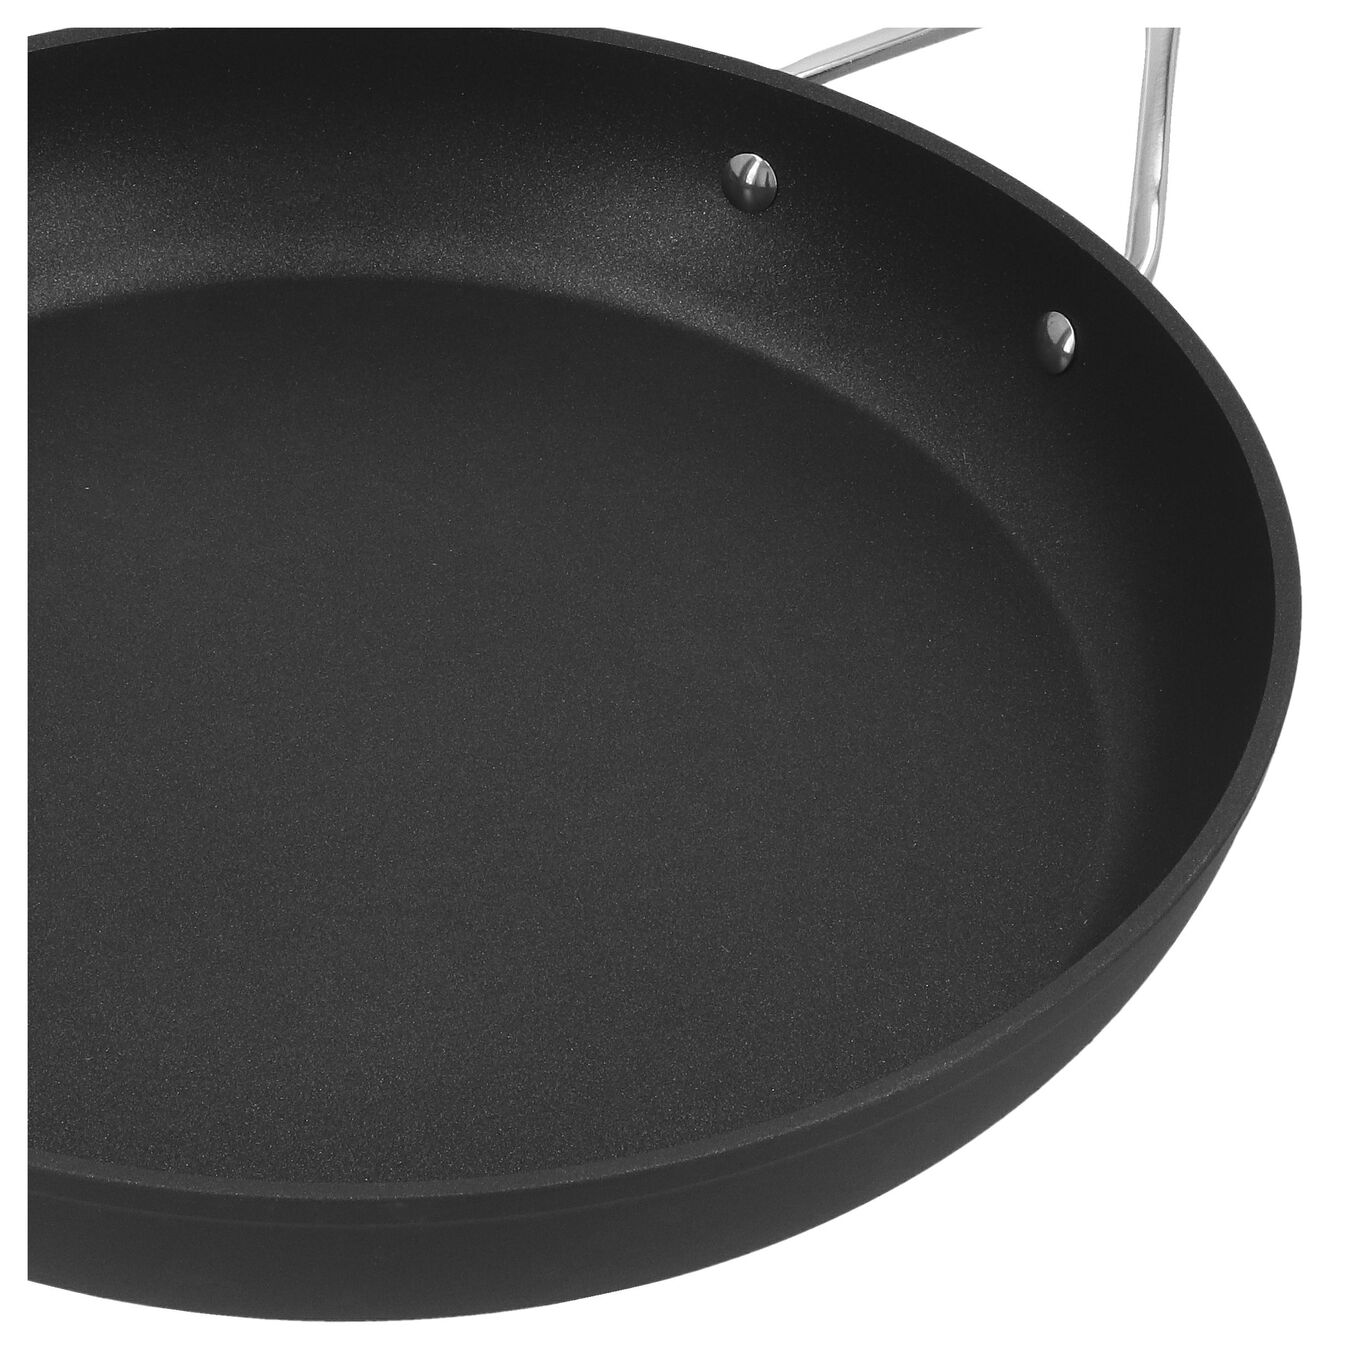 32 cm Aluminum Frying pan silver-black,,large 5